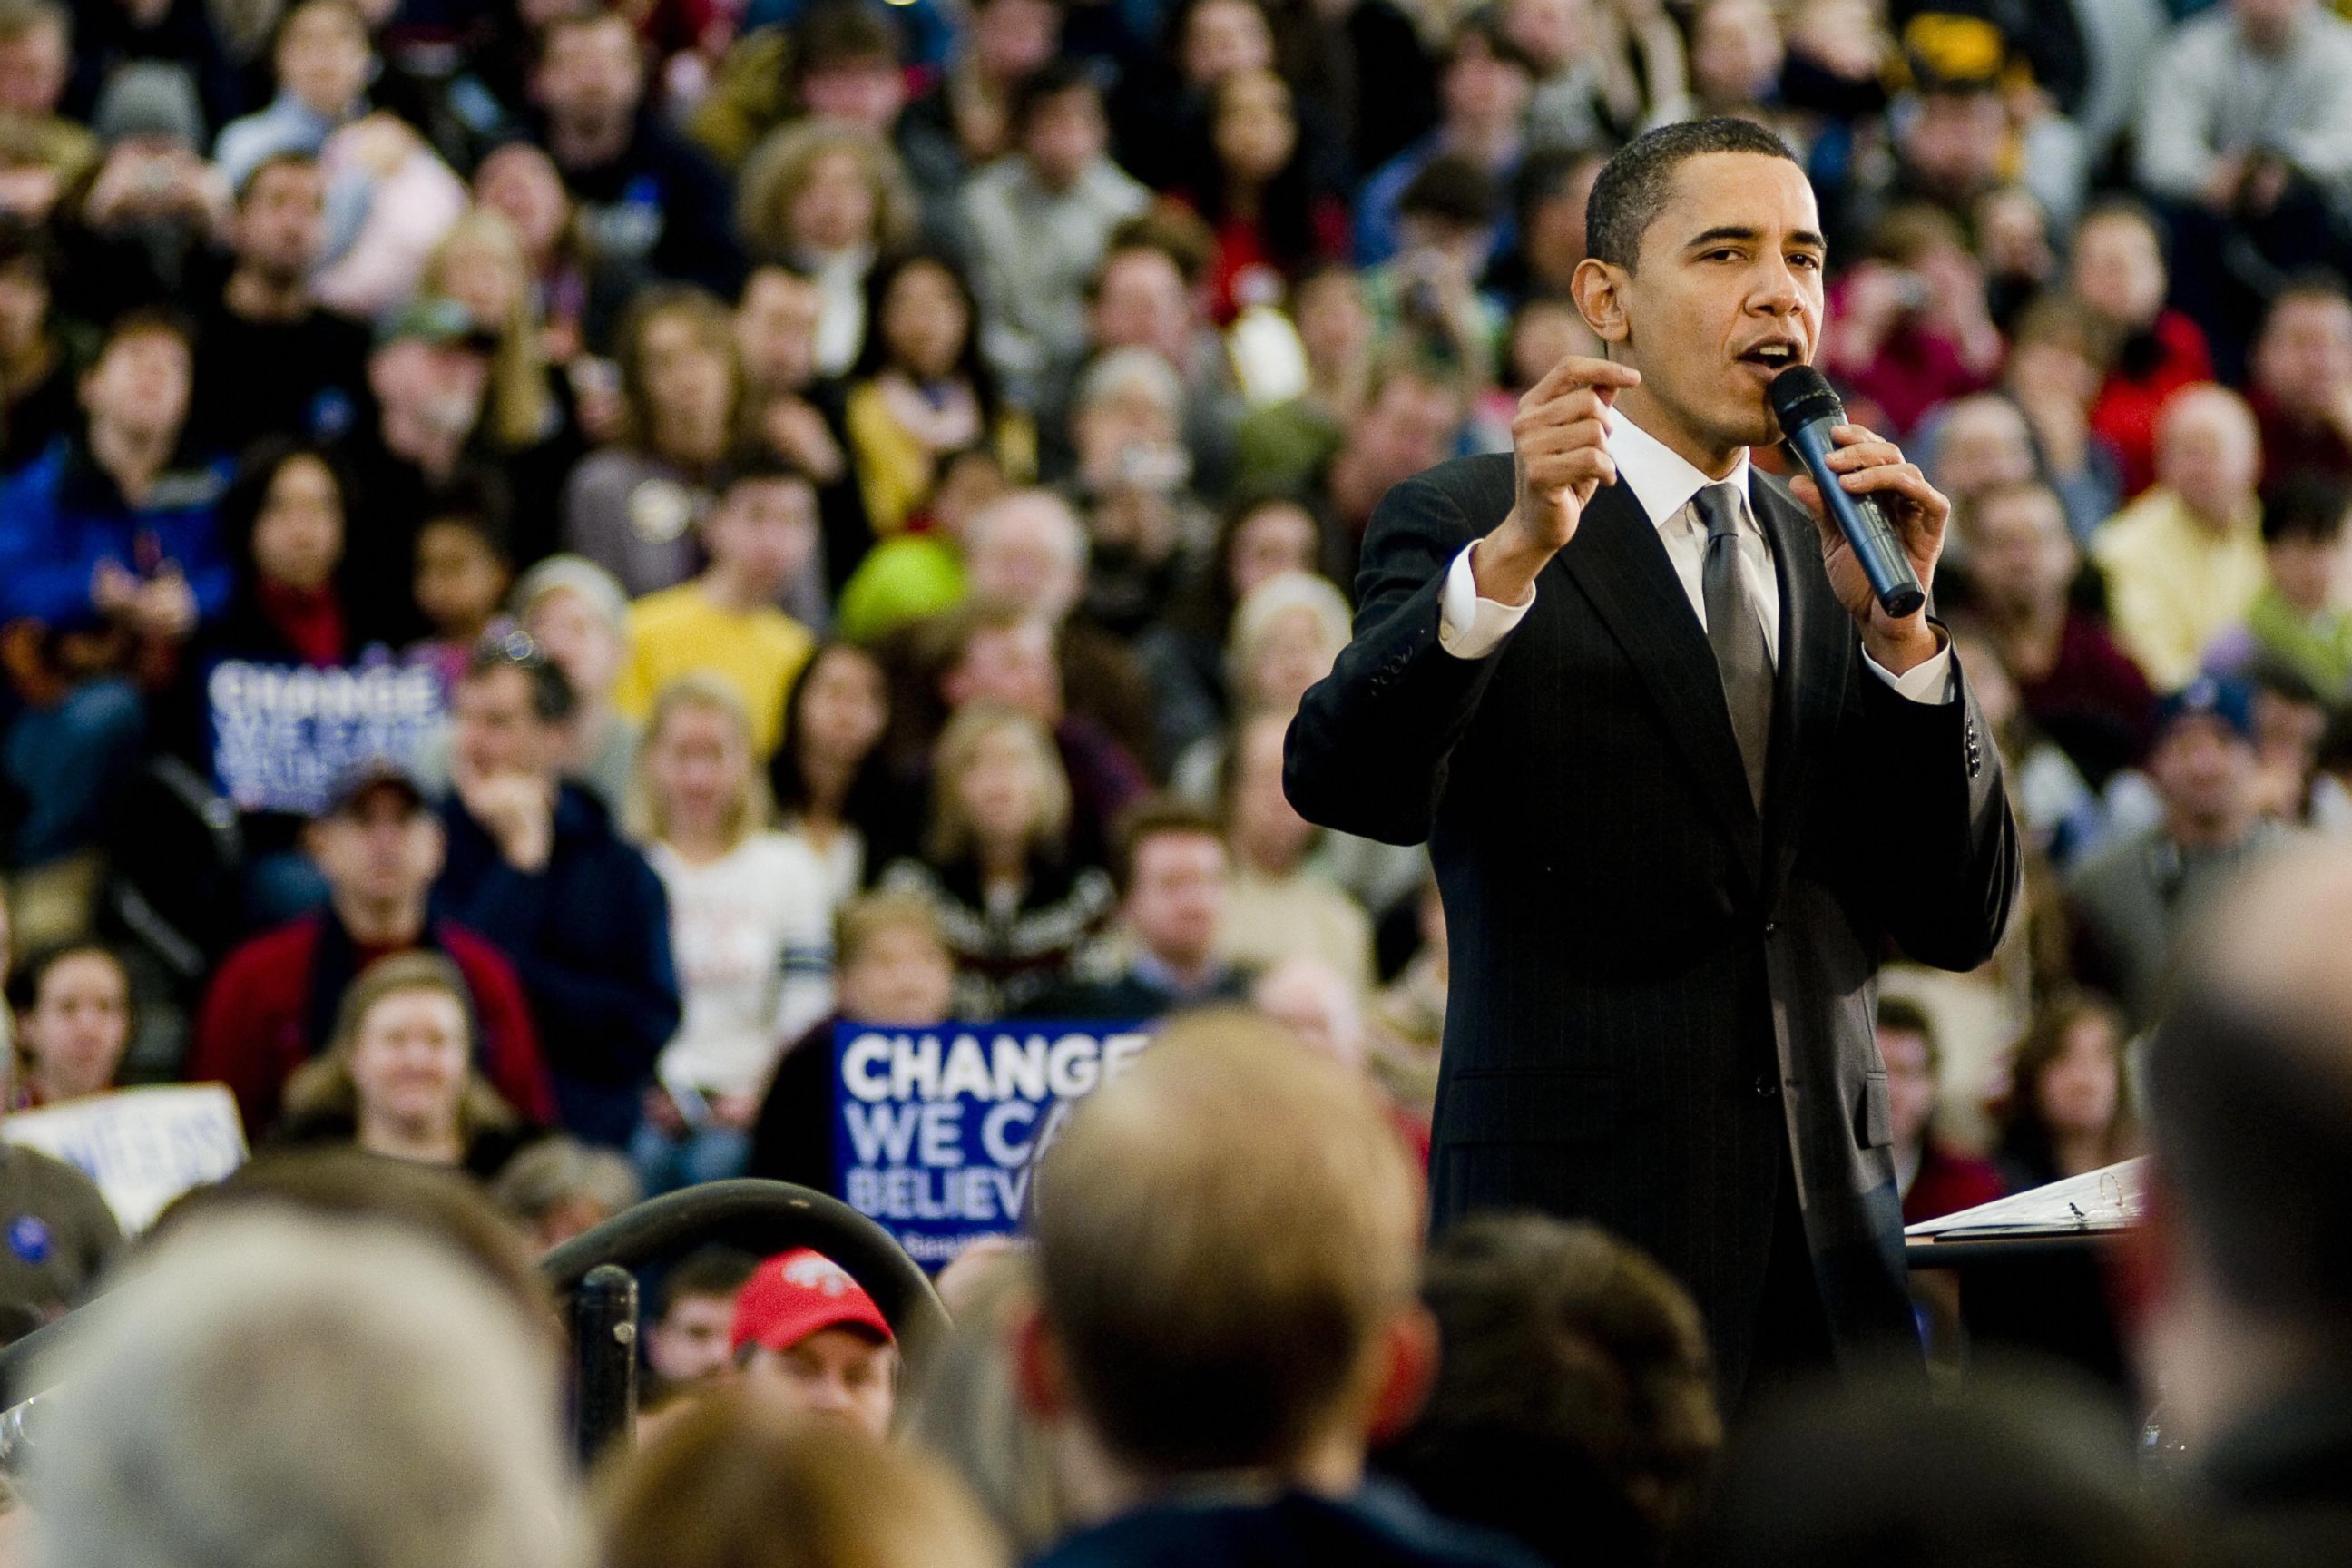 PHOTO: US Democratic presidential candidate Illinois Senator Barack Obama addresses a campaign rally, Jan. 5, 2008, in Nashua, New Hampshire. 